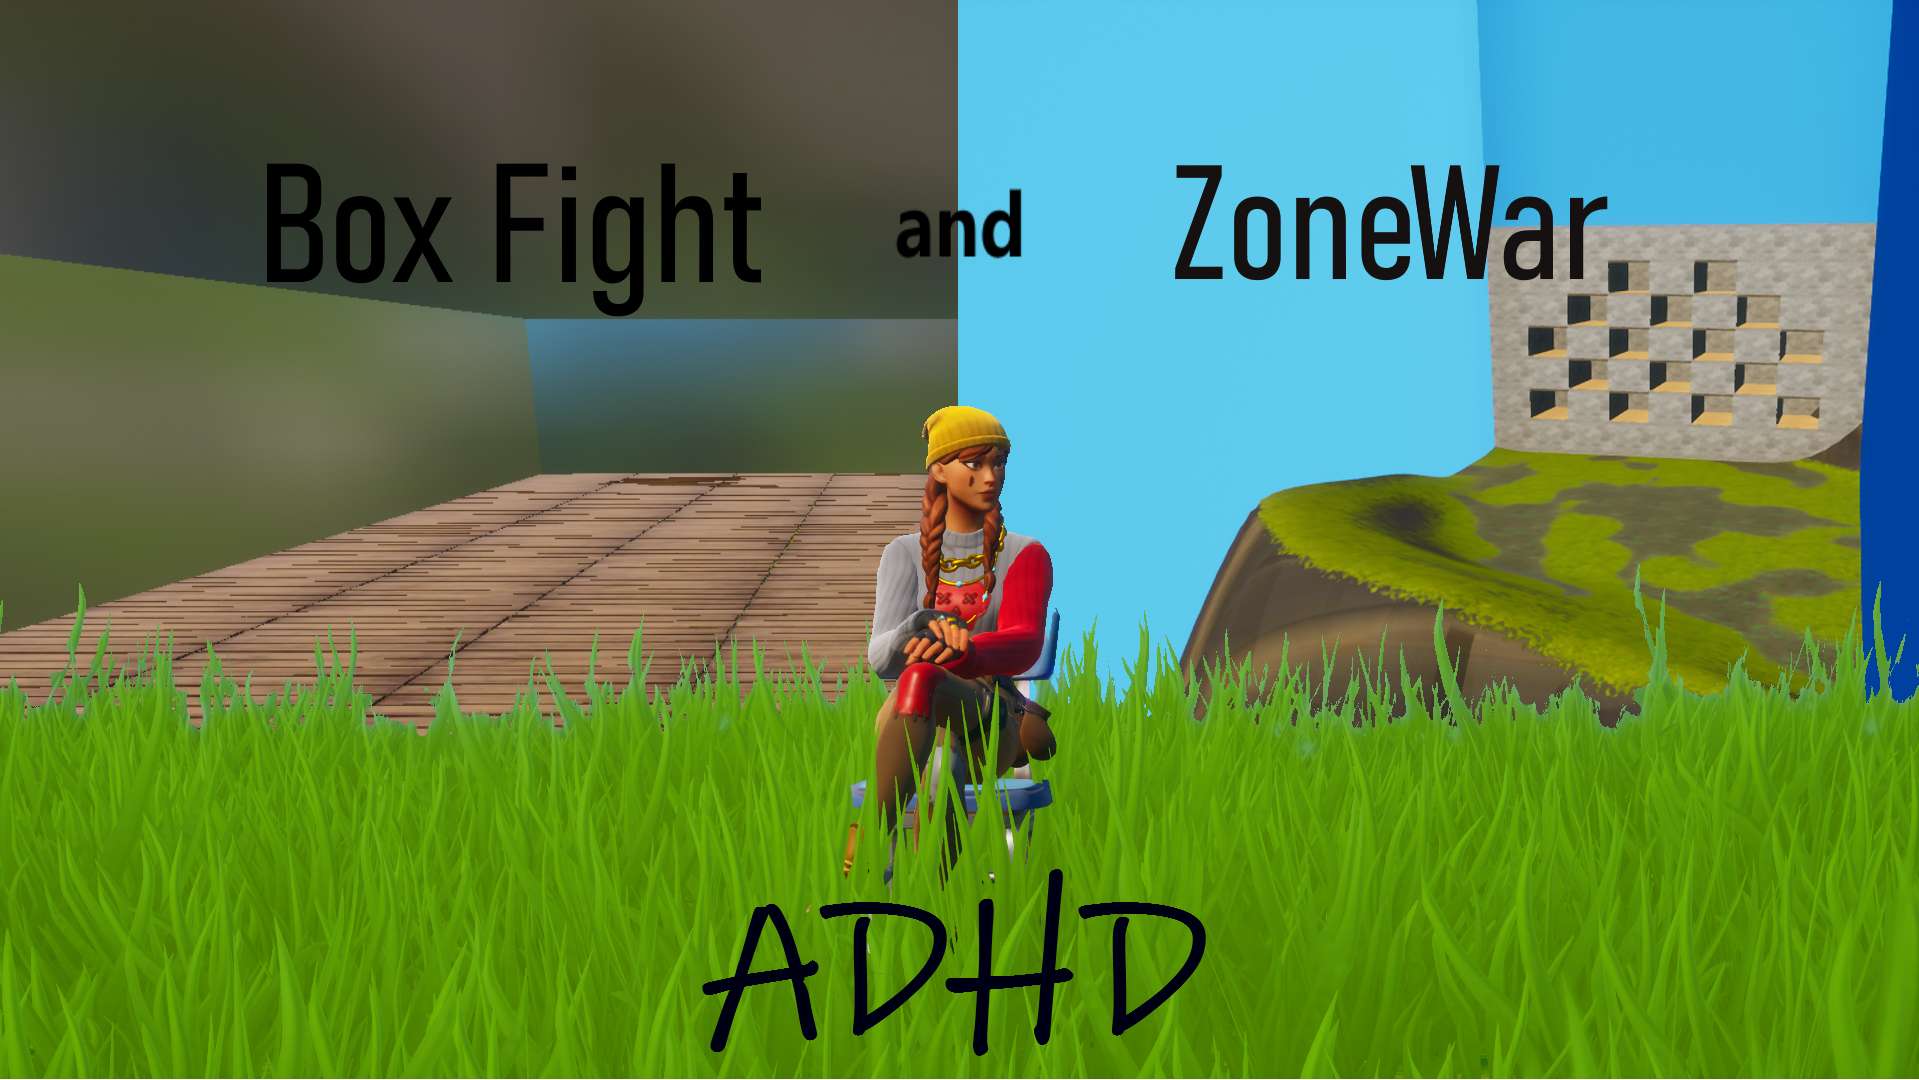 BOX FIGHT & ZONE WAR: ADHD image 2